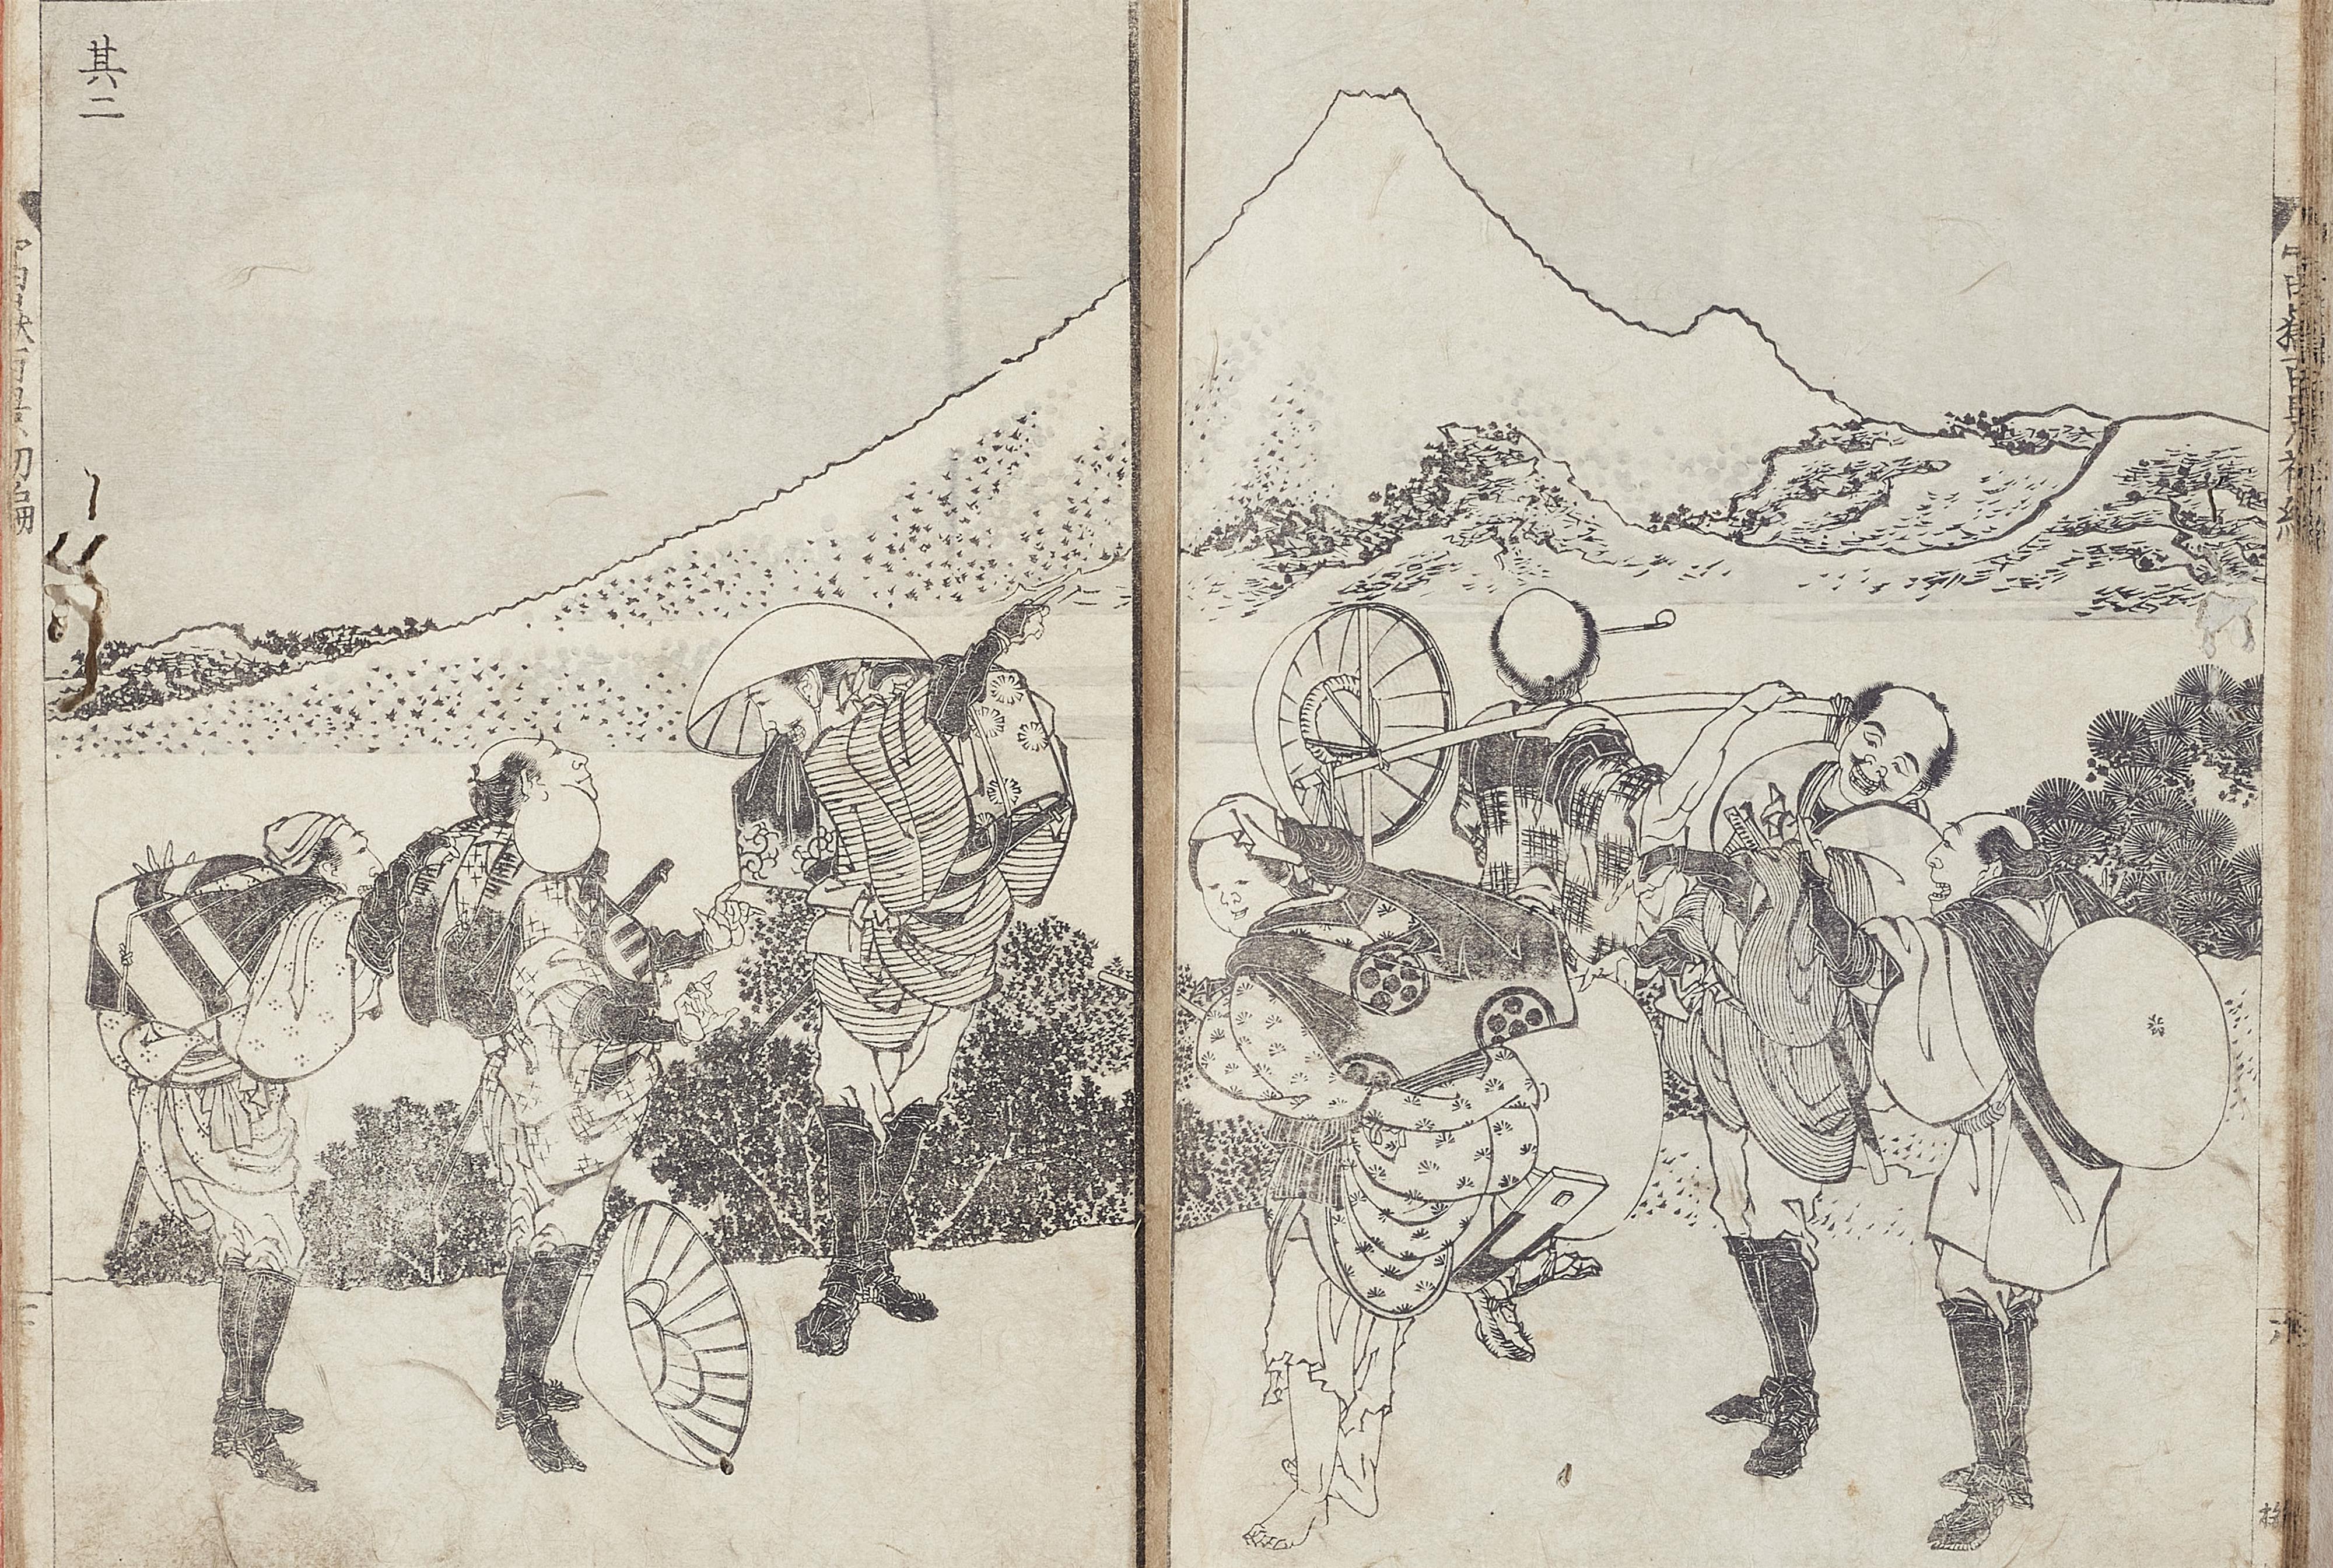 Katsushika Hokusai - Illustriertes Buch - image-2